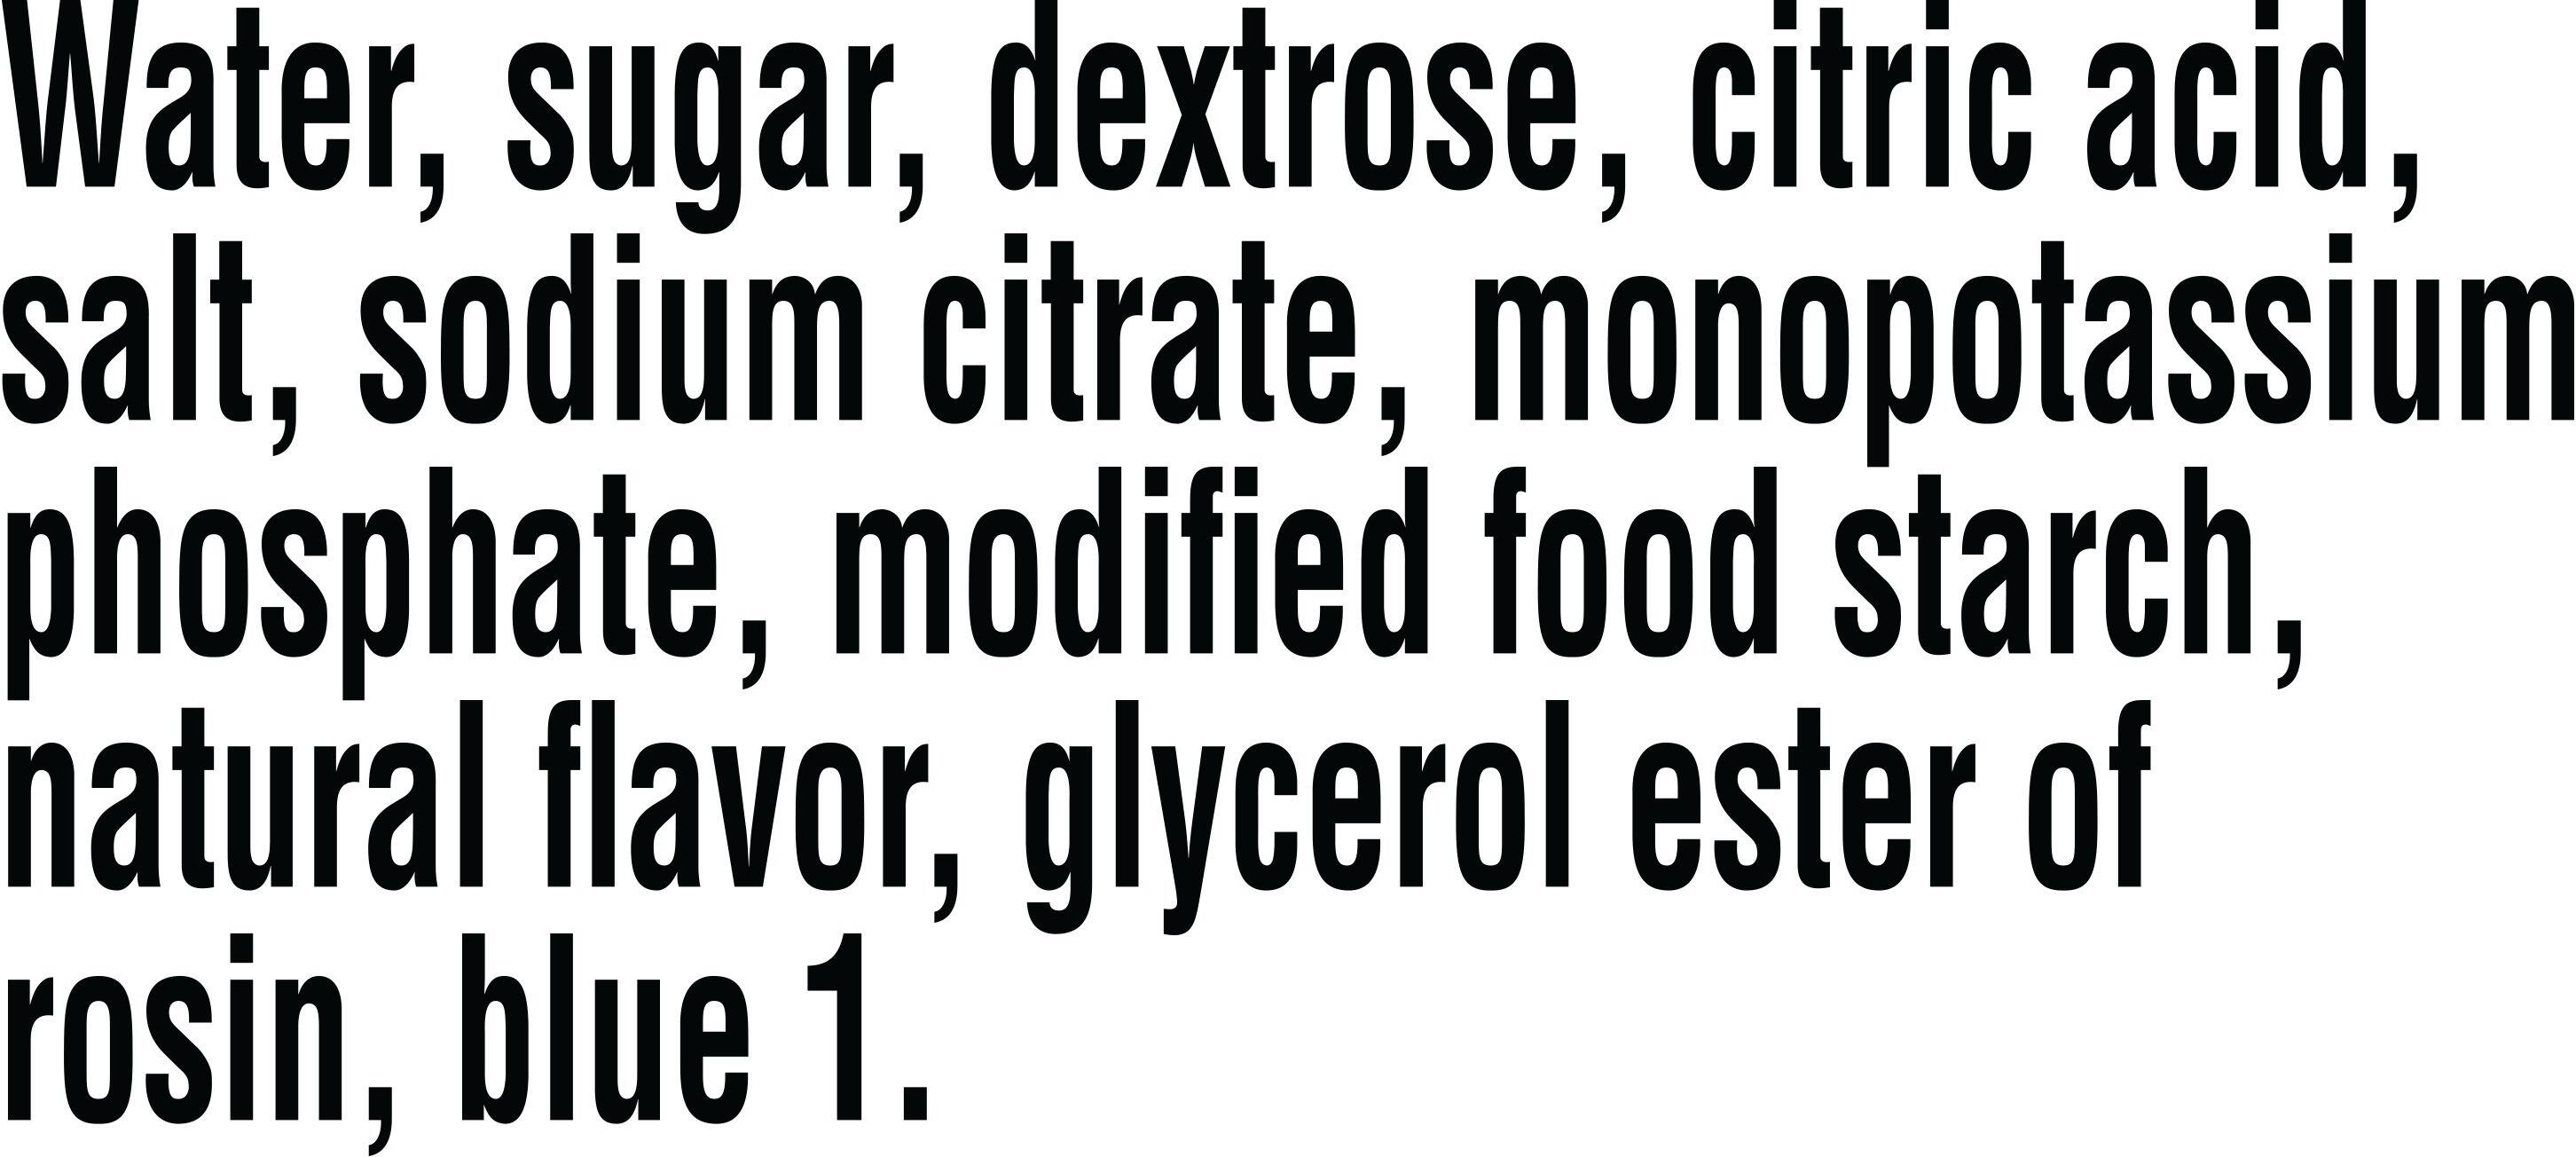 Image describing nutrition information for product Gatorade Glacier Freeze